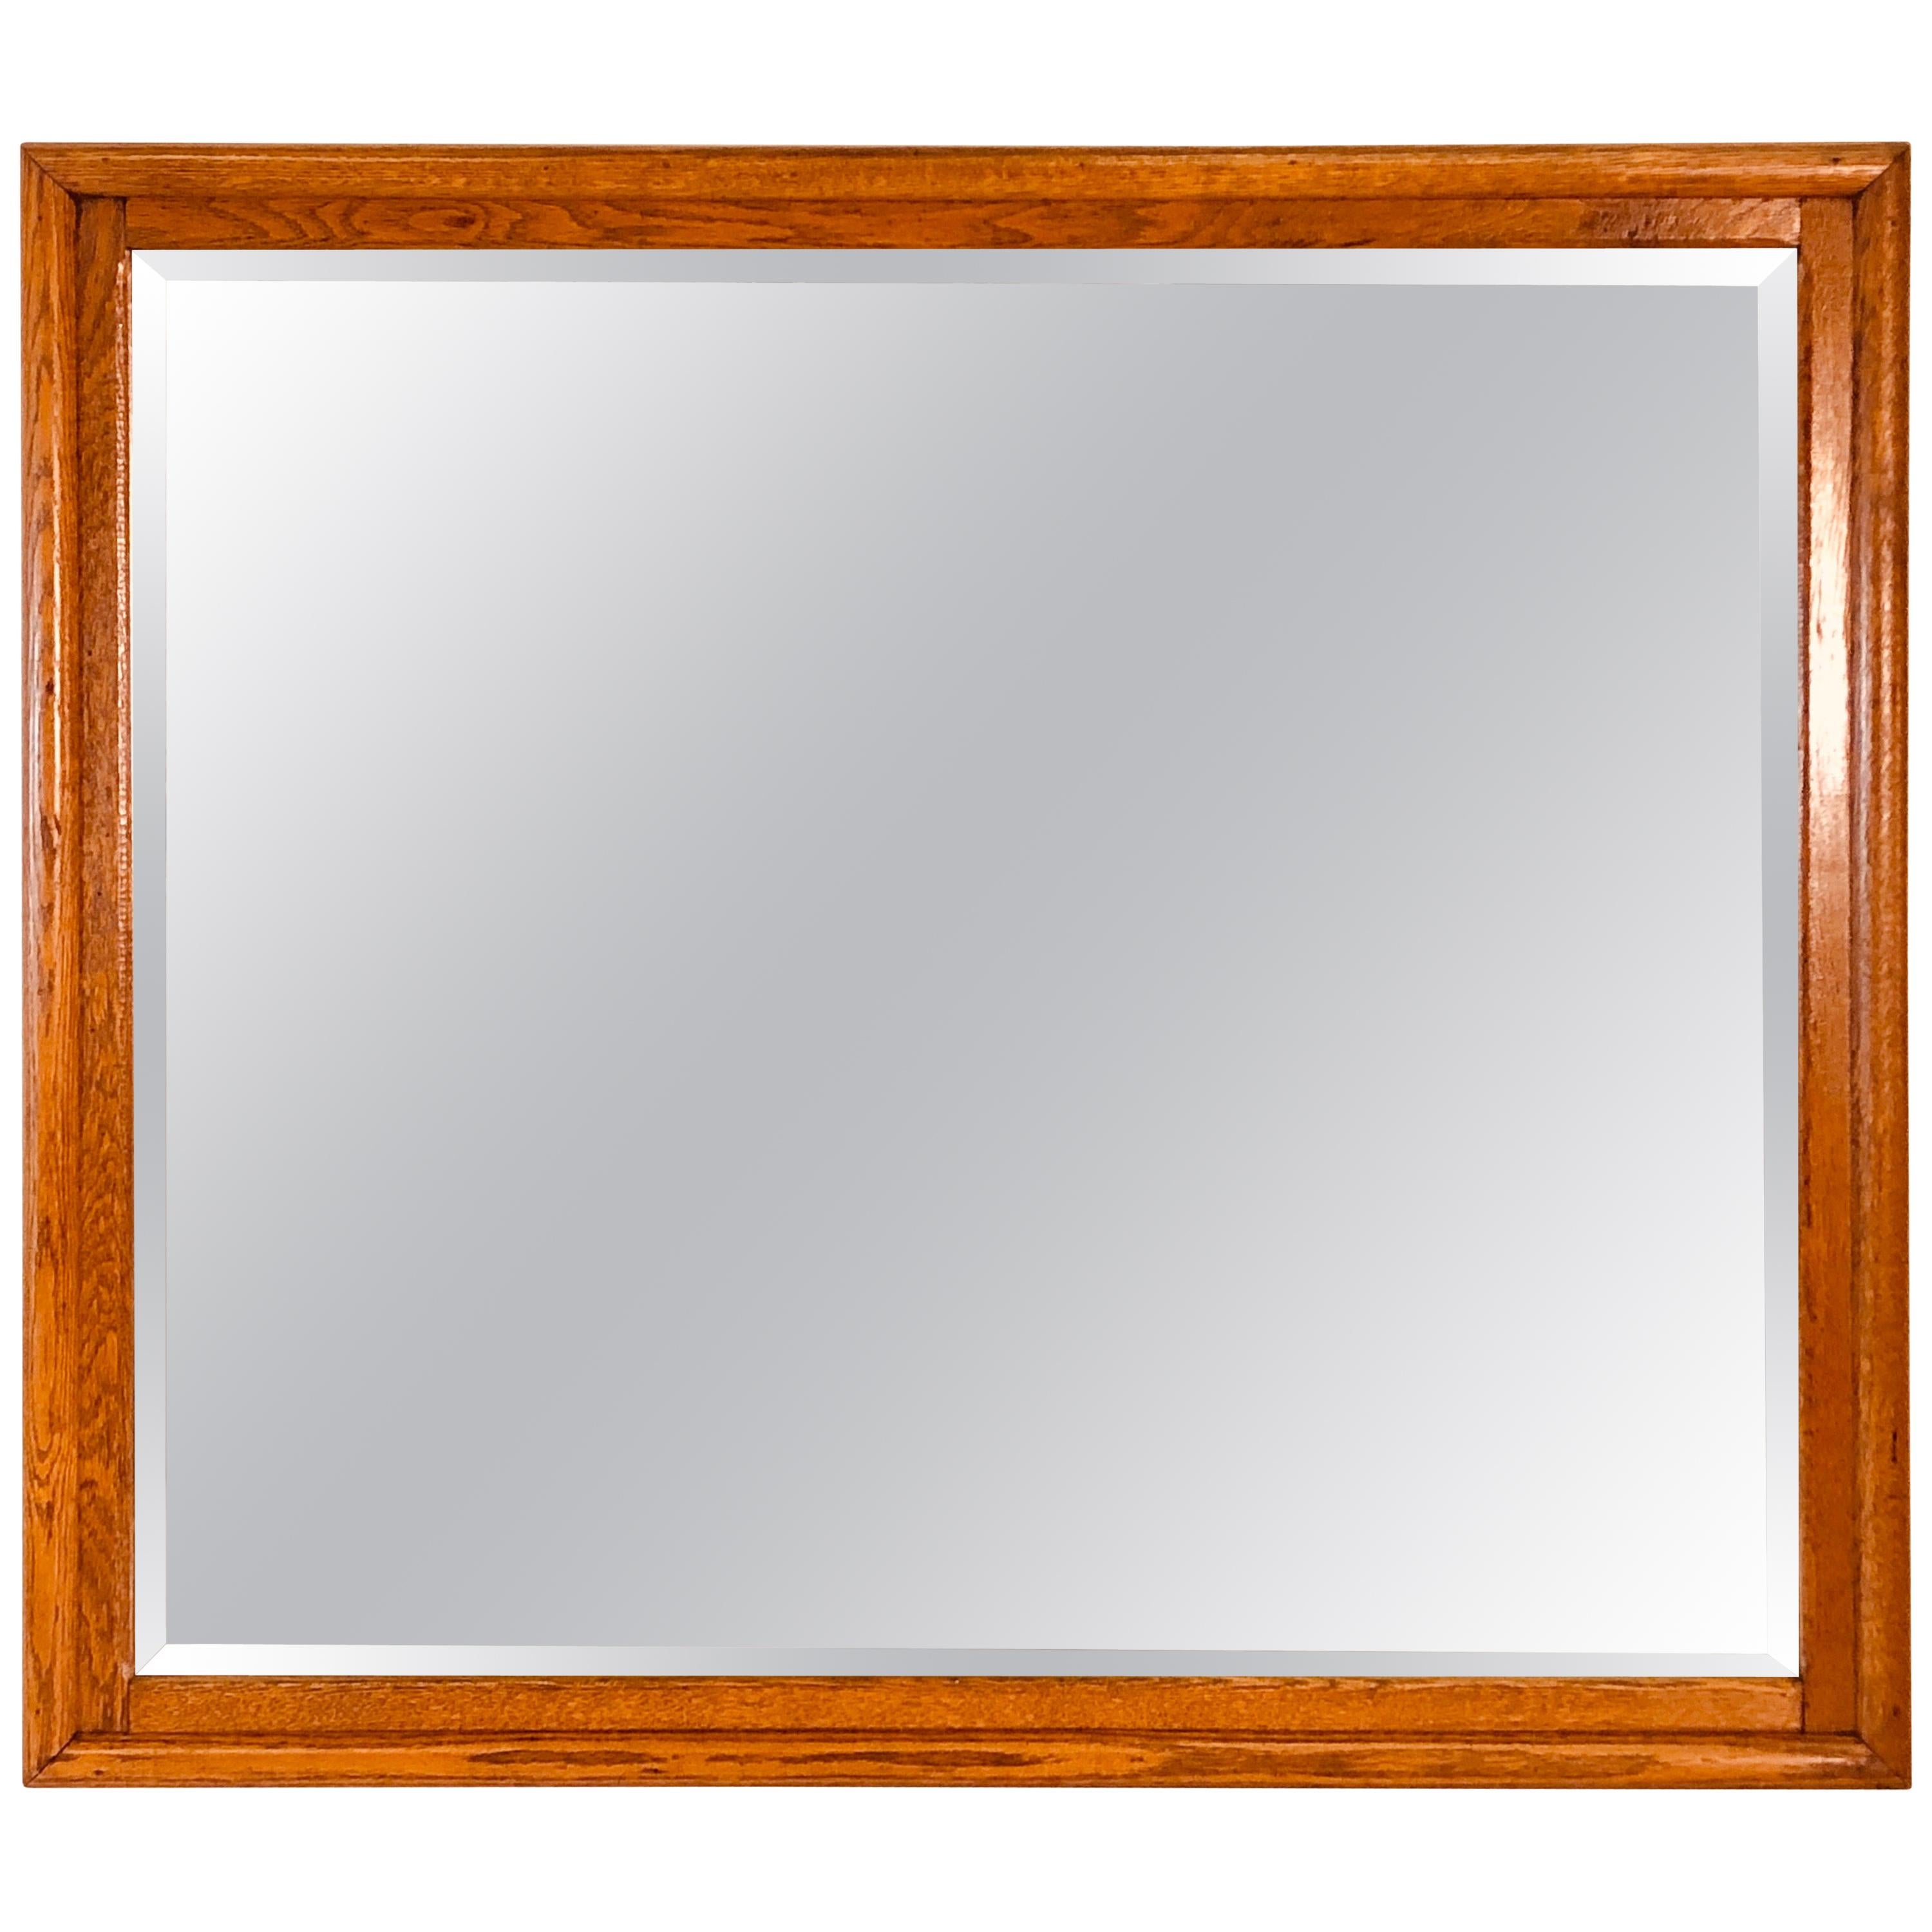 Quarter-Sawn Oak Framed Wall Mirror For Sale